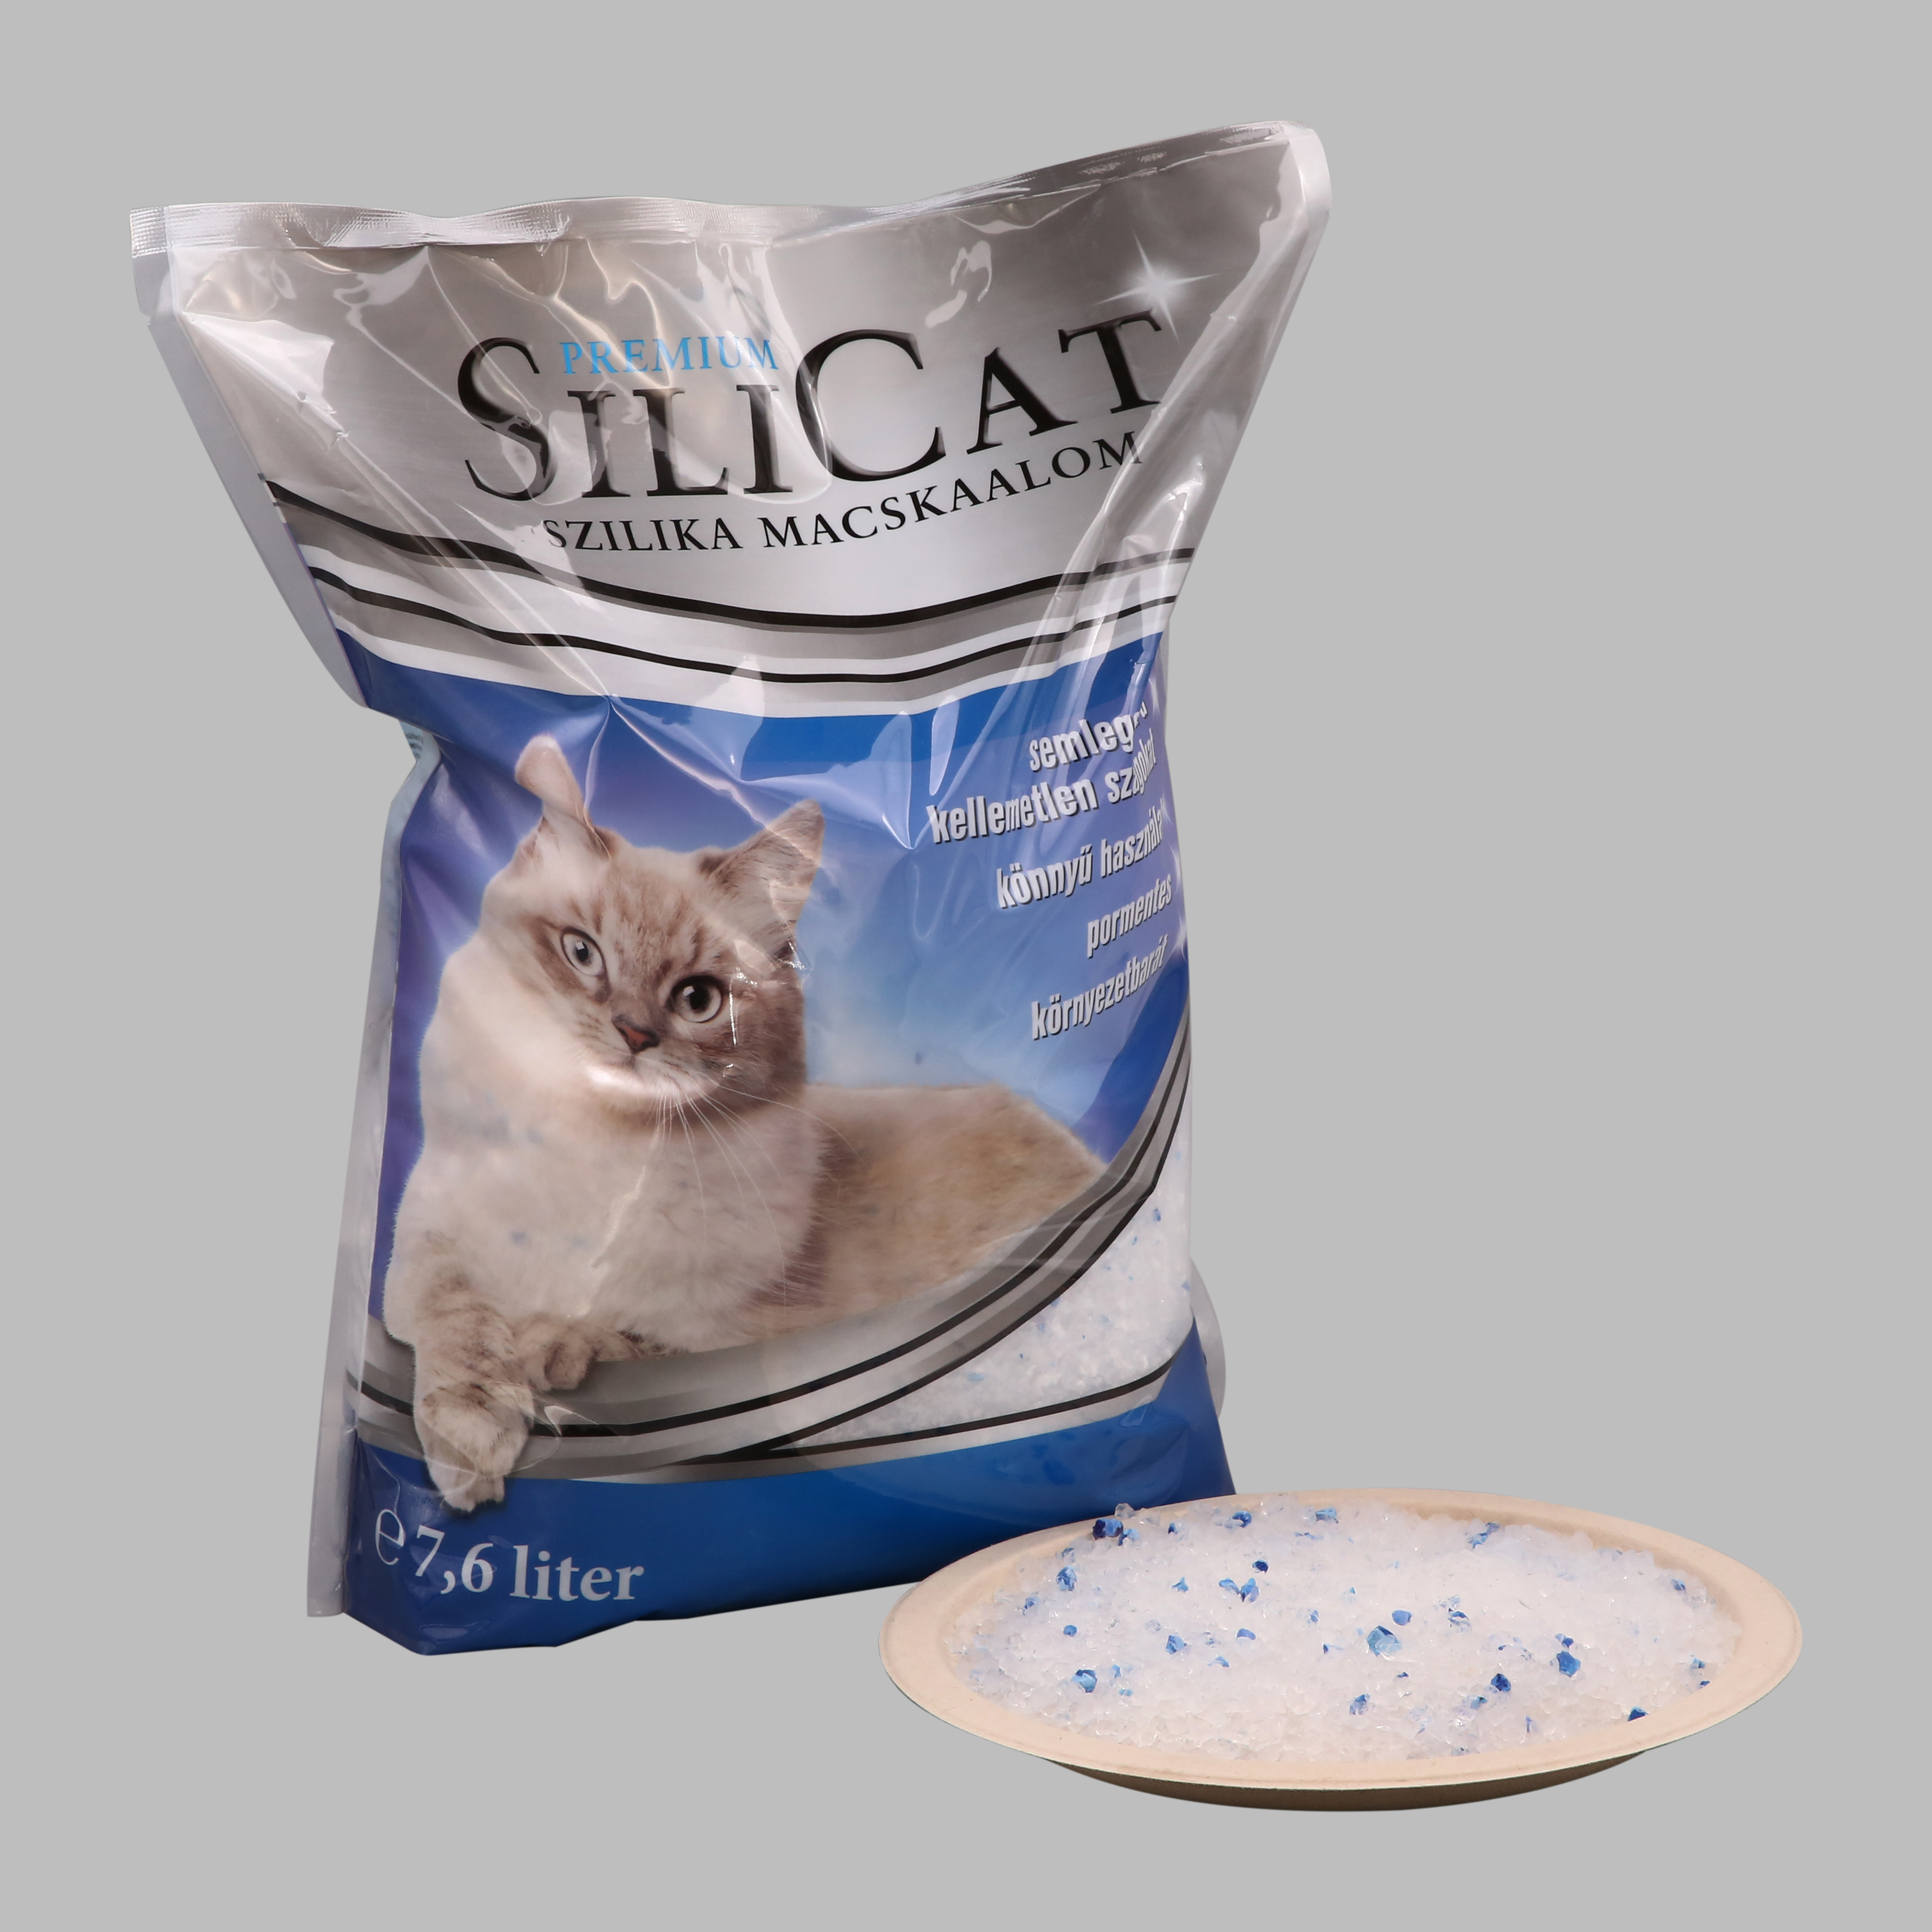 Silica gel cat litter-1